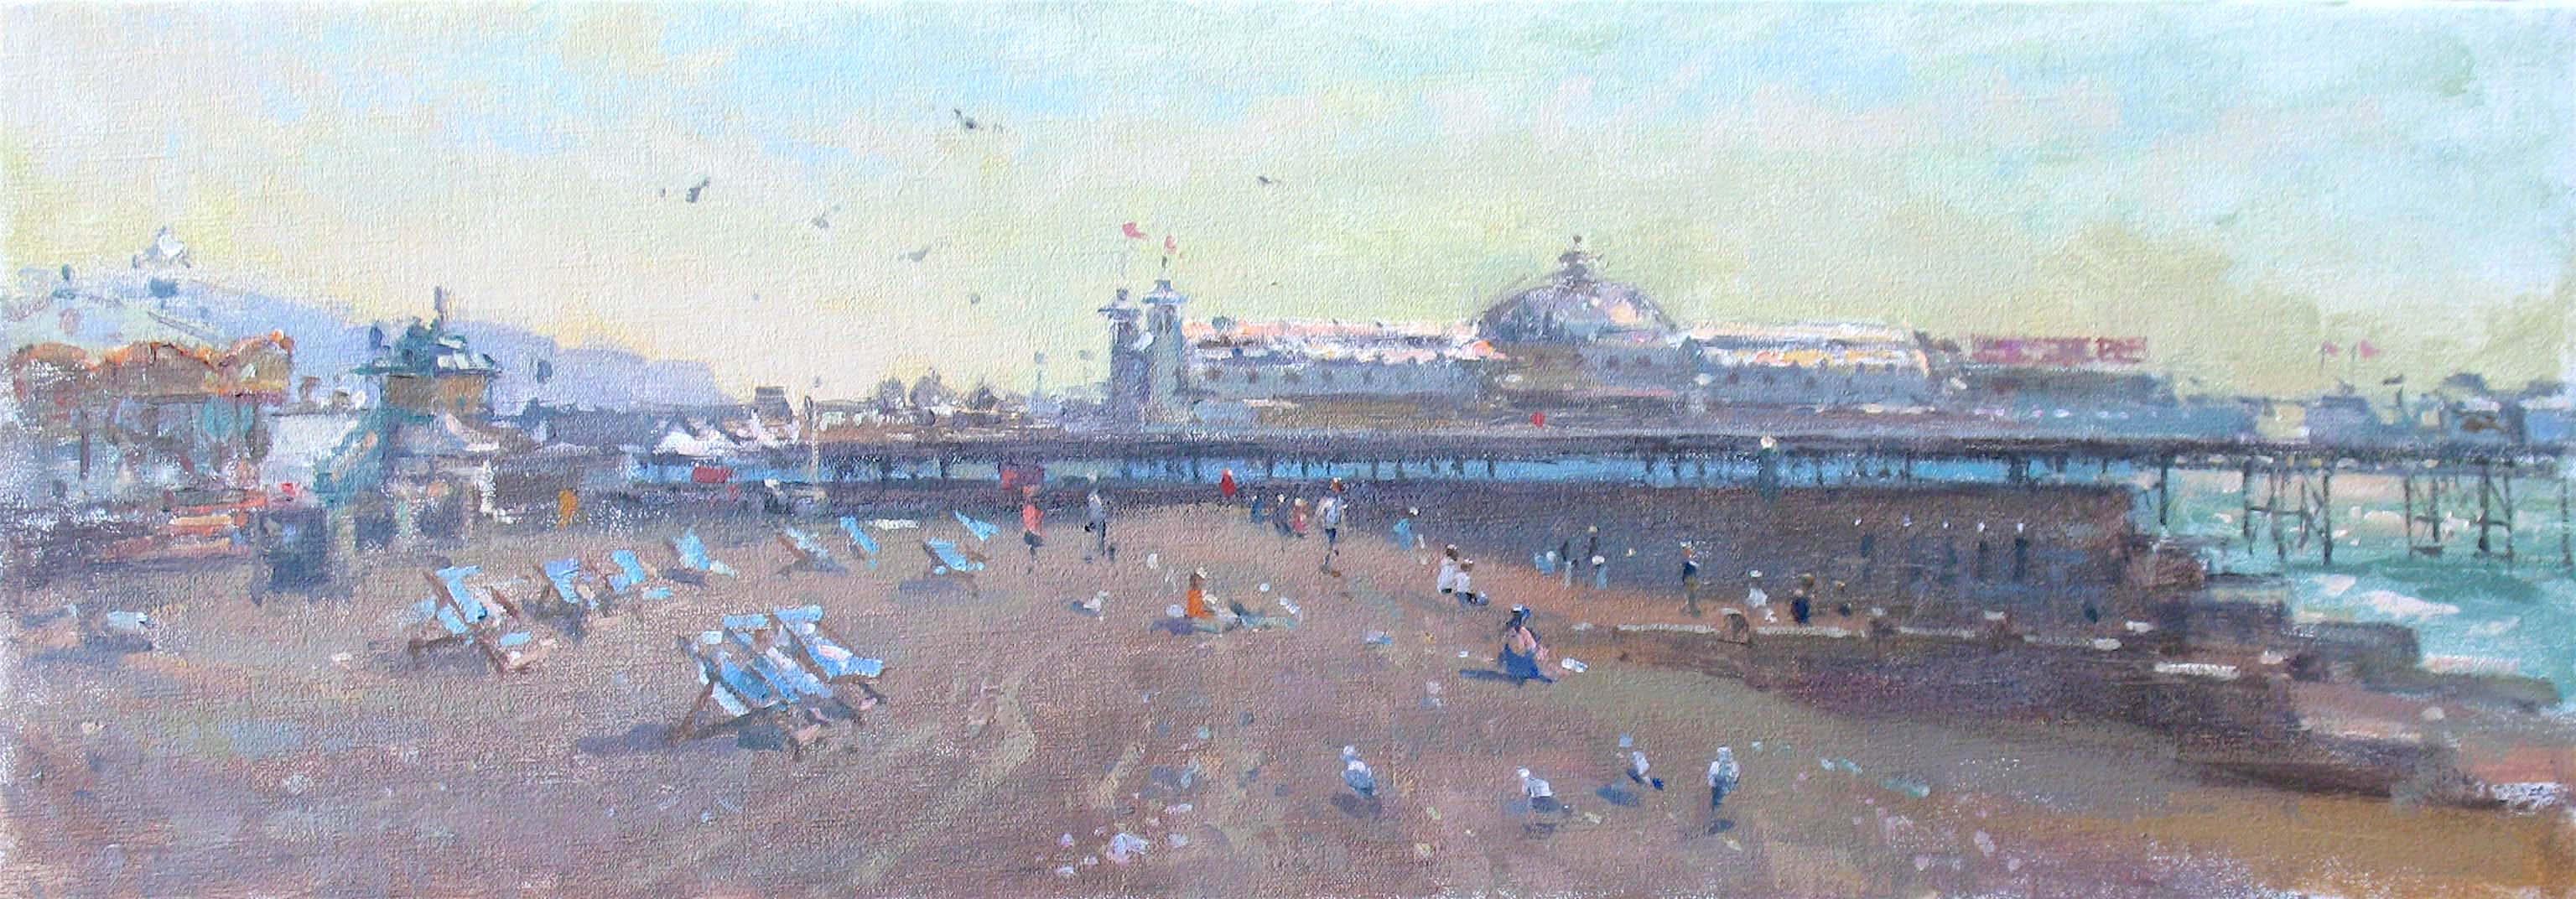 First Deckchairs Palace Pier - seascape modern coastal oil paint impressionist